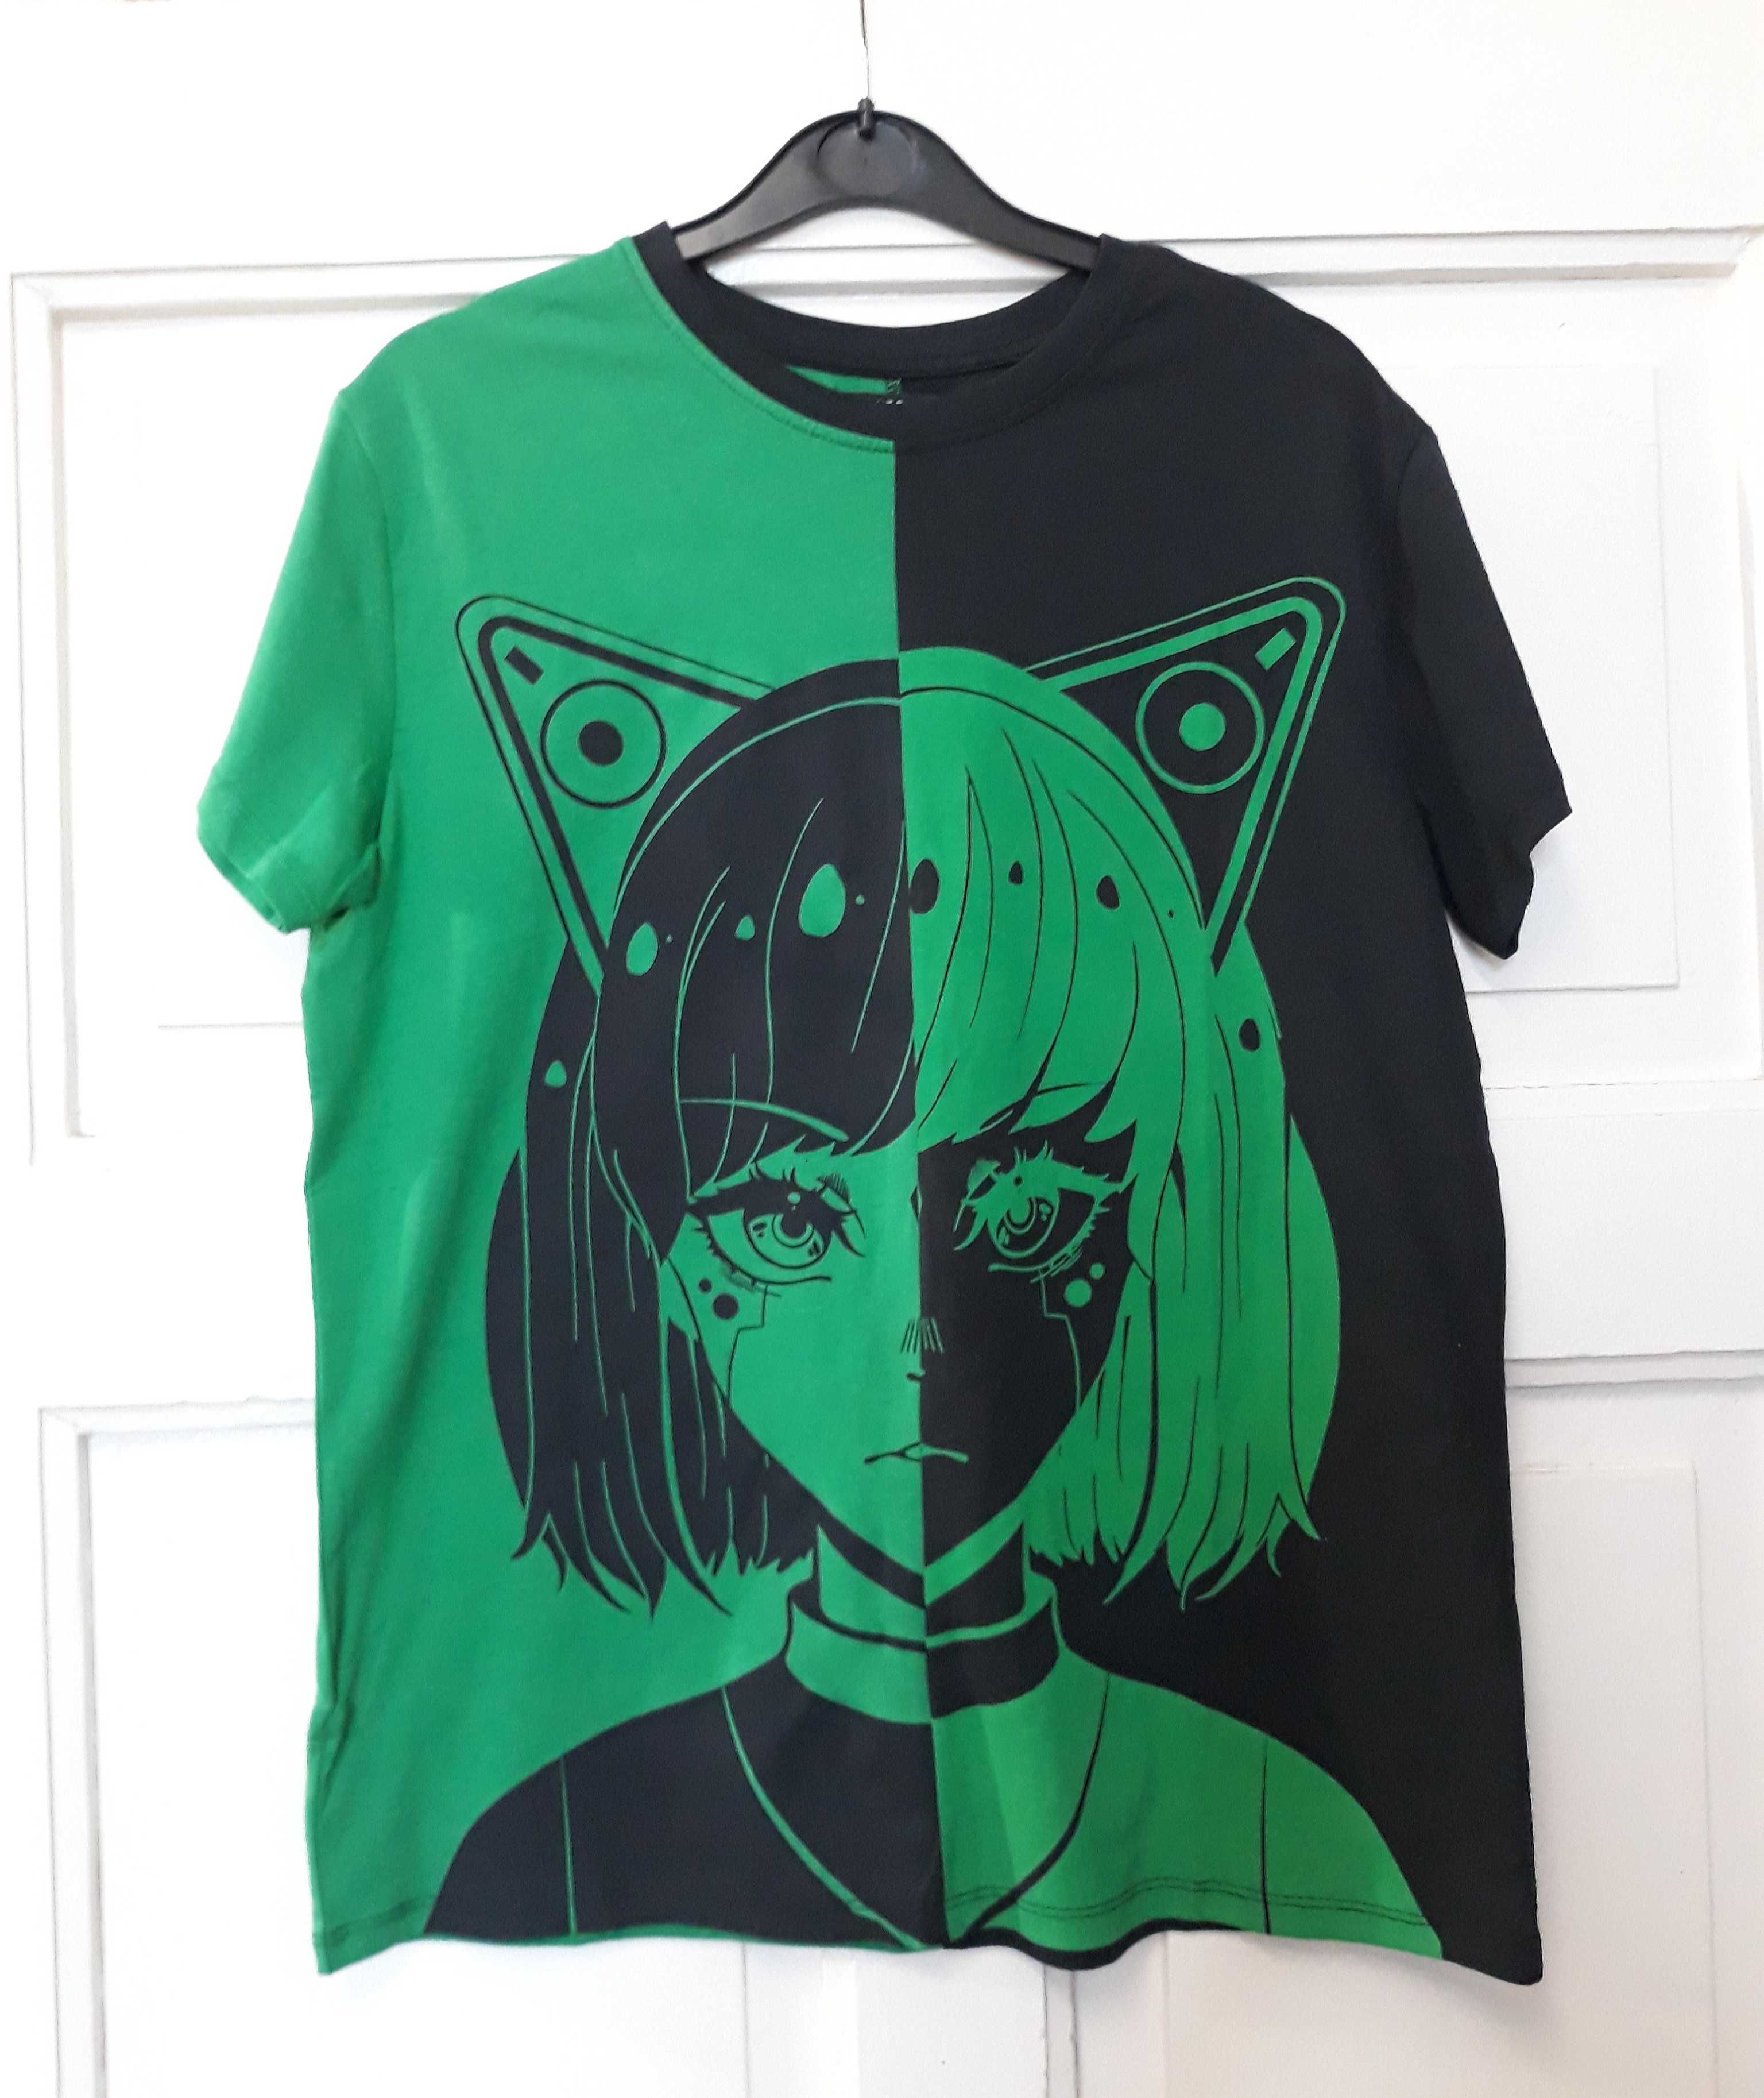 Koszulka damska z wzorem anime/manga